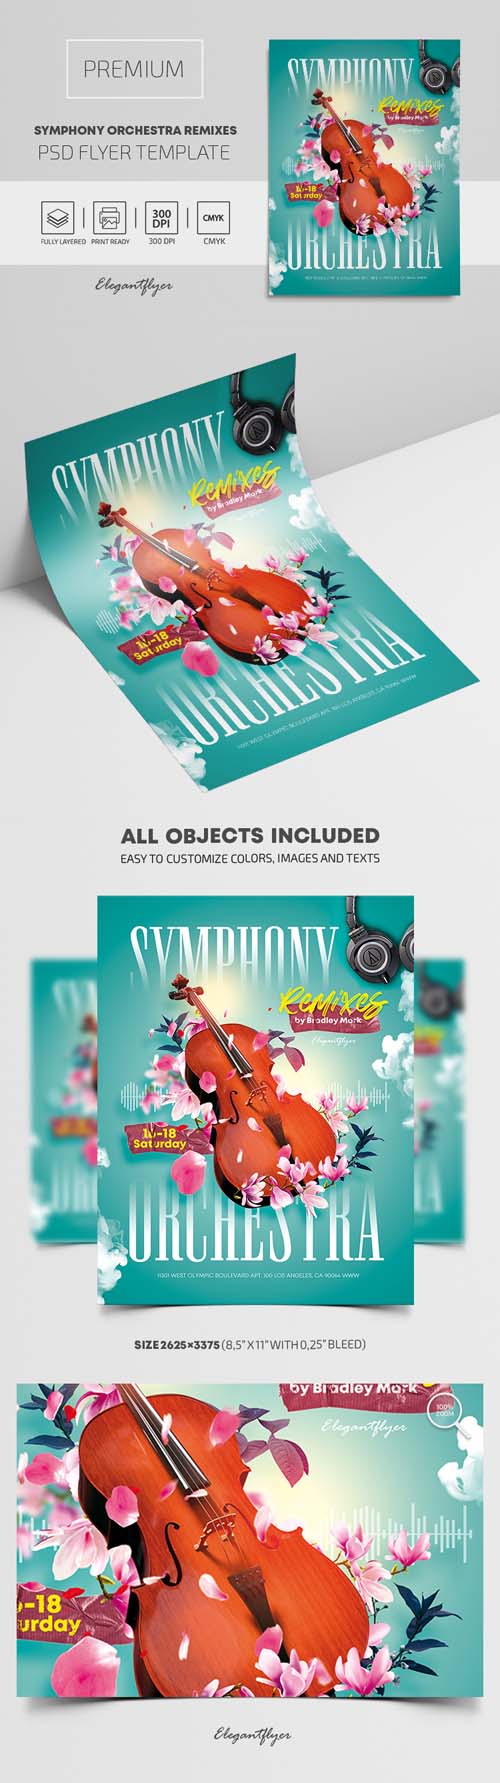 Symphony Orchestra Remixes Premium PSD Flyer Template